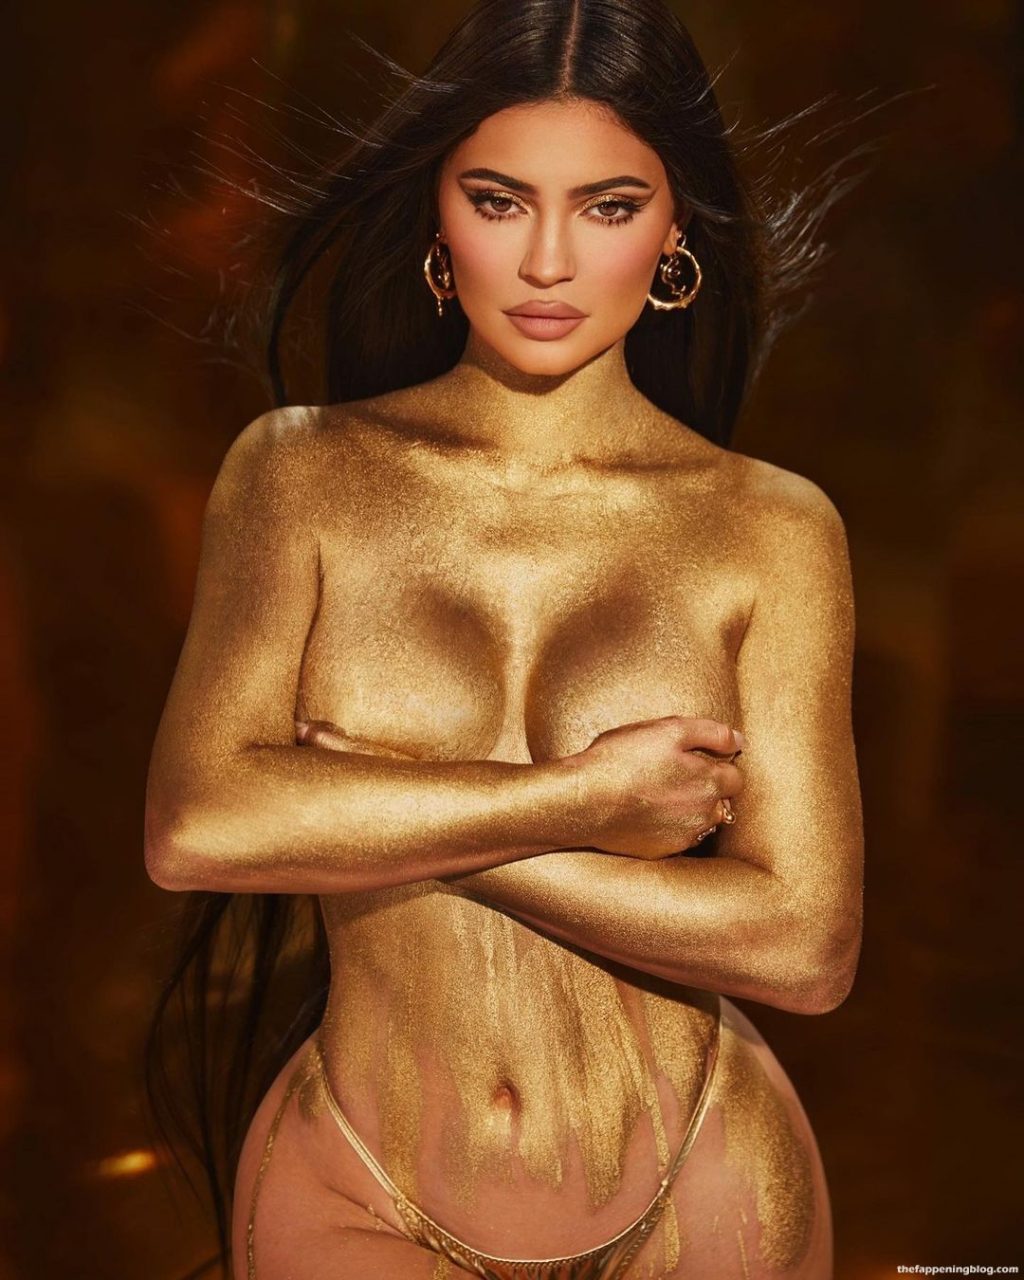 Kylie Jenner Topless (2 Hot Photos)